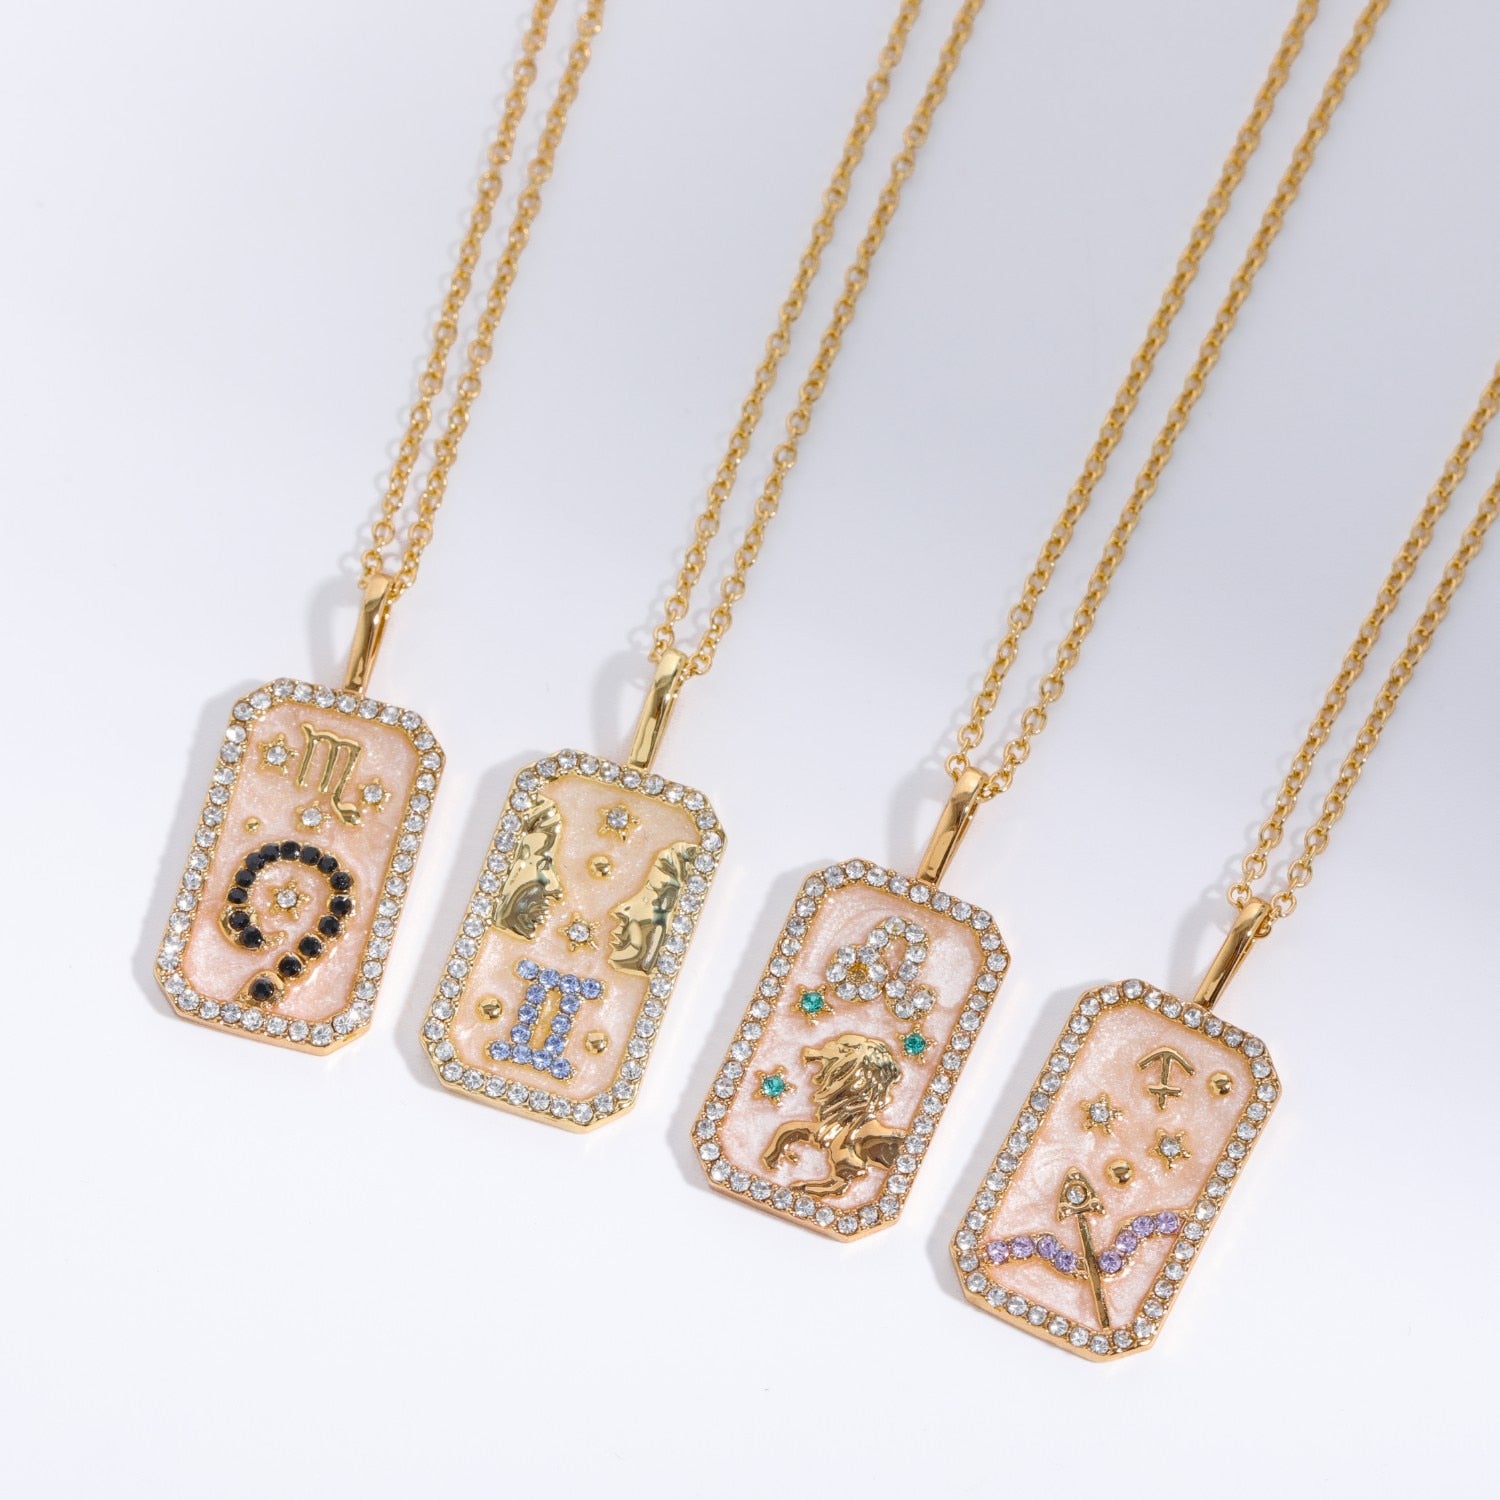 Zodiac Sign Zircon Stone Necklace | 12 Constellation Gold-Plated Enamel Pendant | Astrology Jewelry Gift For Spiritual Woman | Apollo Tarot Shop